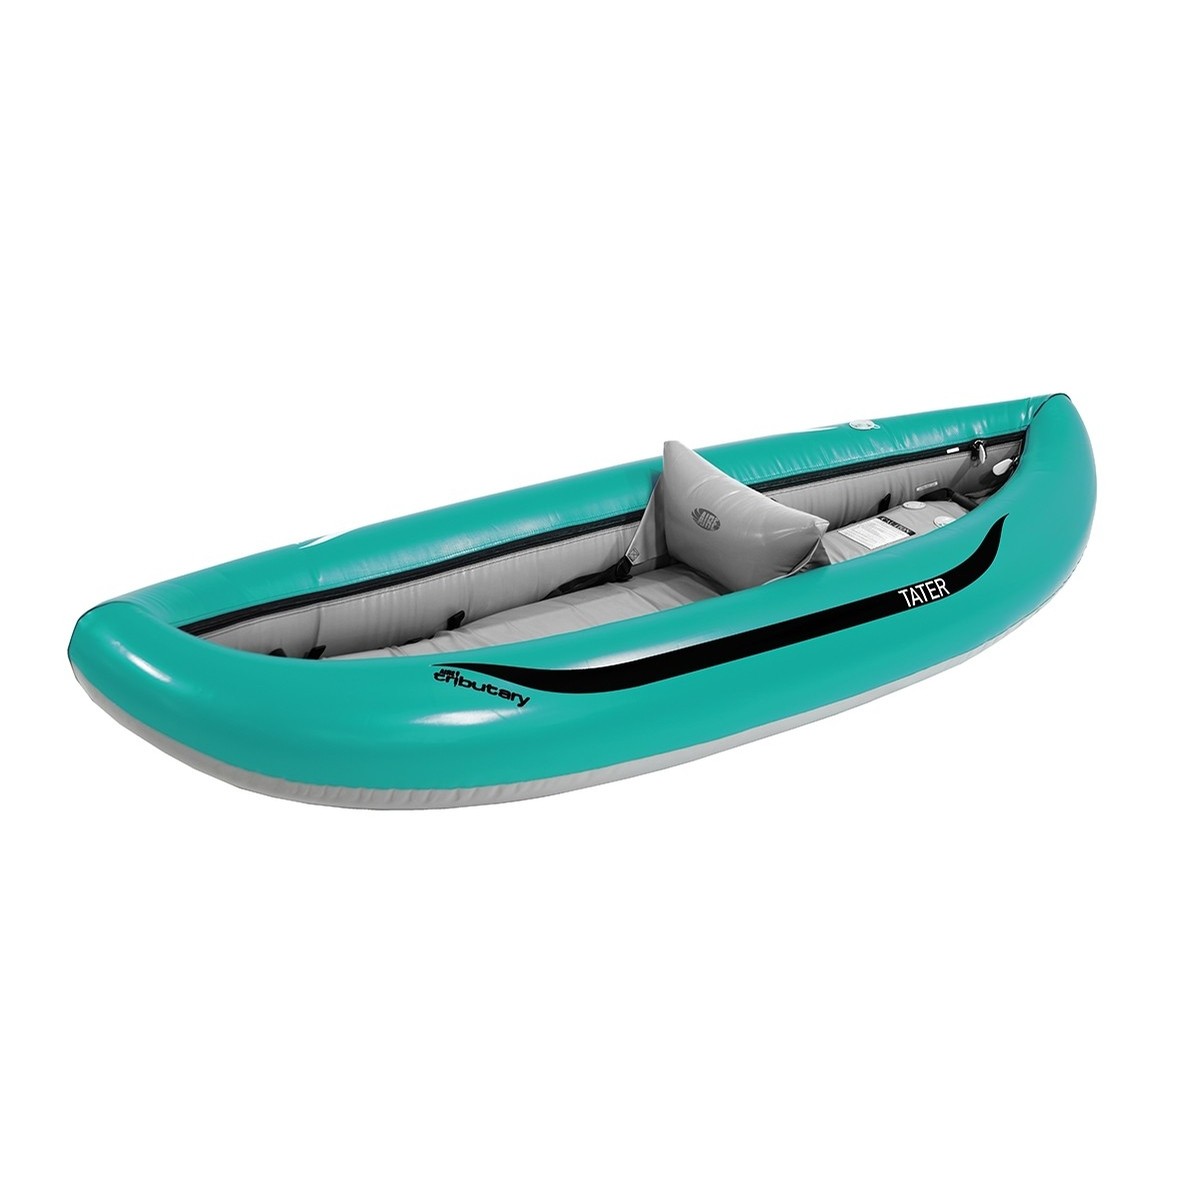 Dream Kayaks - Flying Fox 14X Inflatable Pedal Kayak.